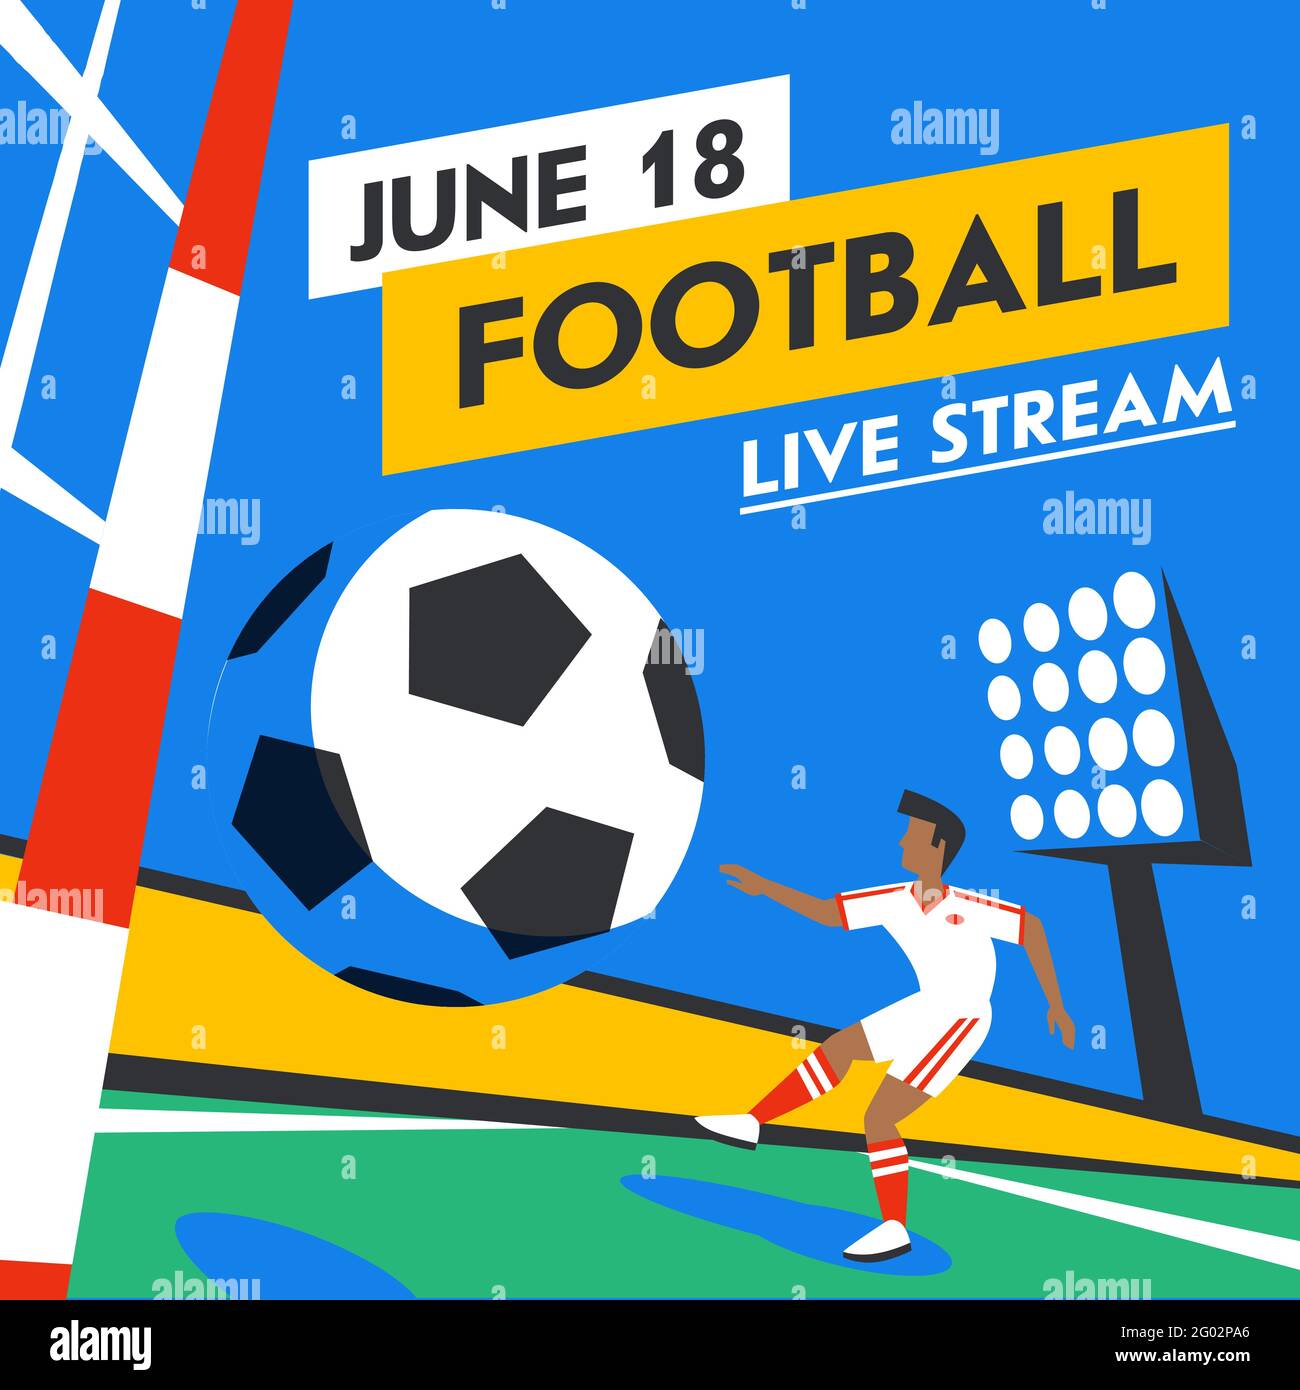 Football web banner. Live stream game